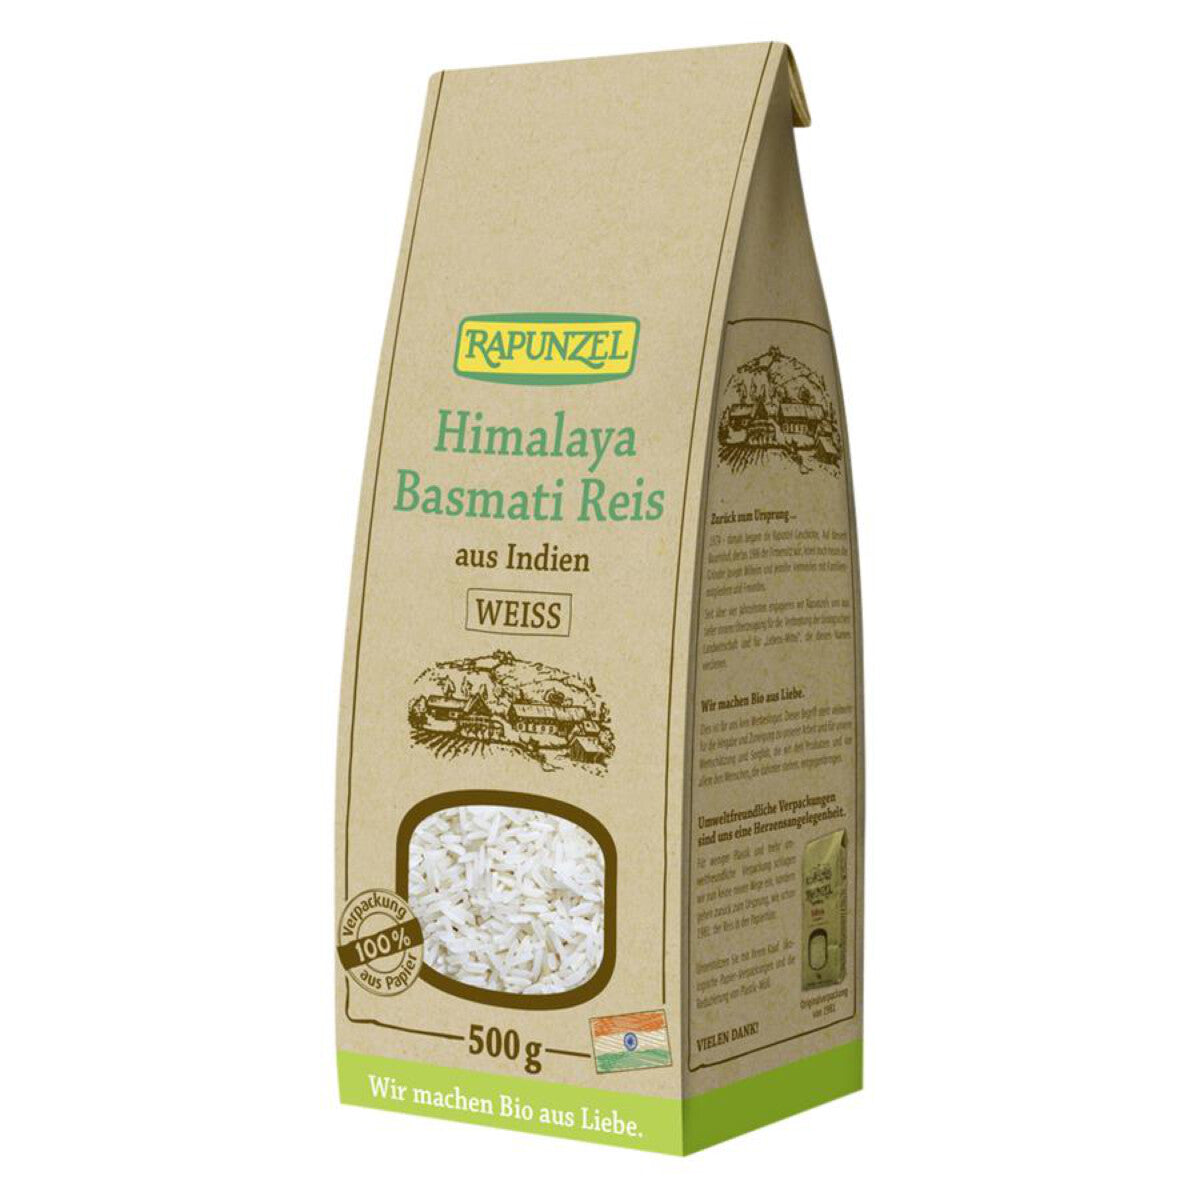 RAPUNZEL Himalaya Basmati Reis weiß – 500 g